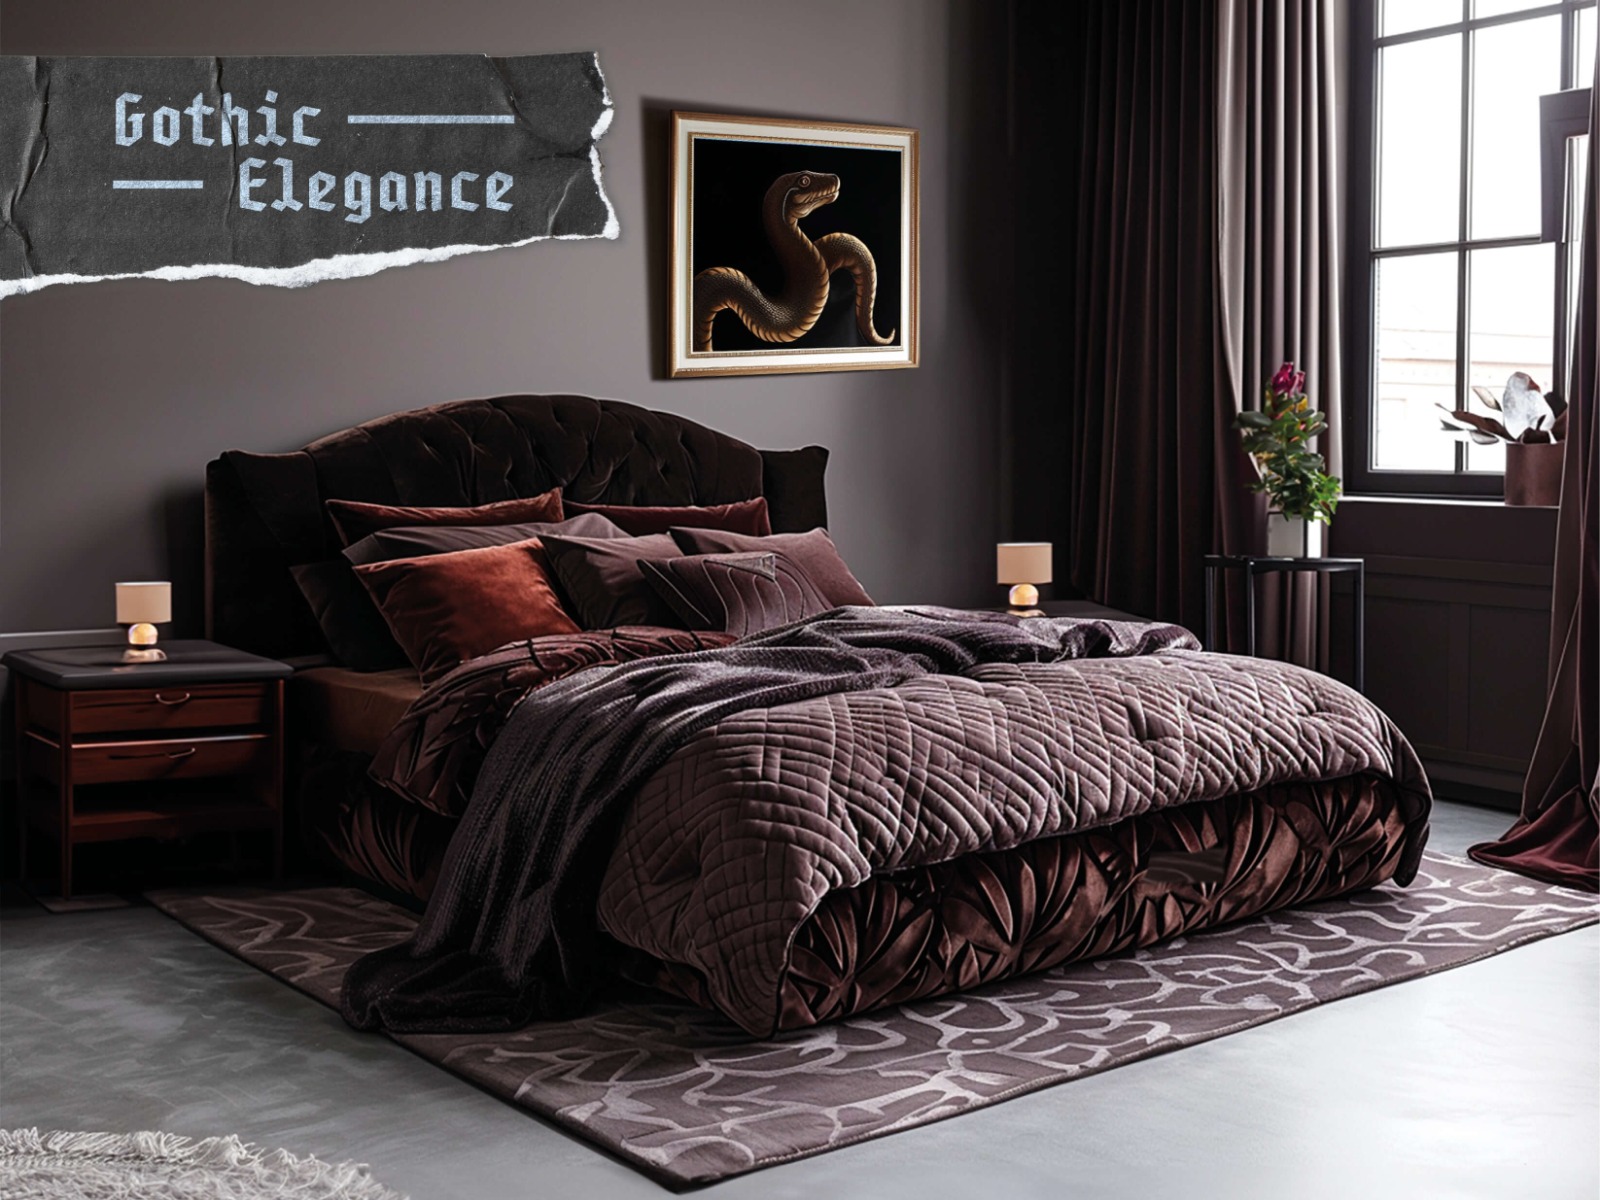 Gothic elegance bedroom